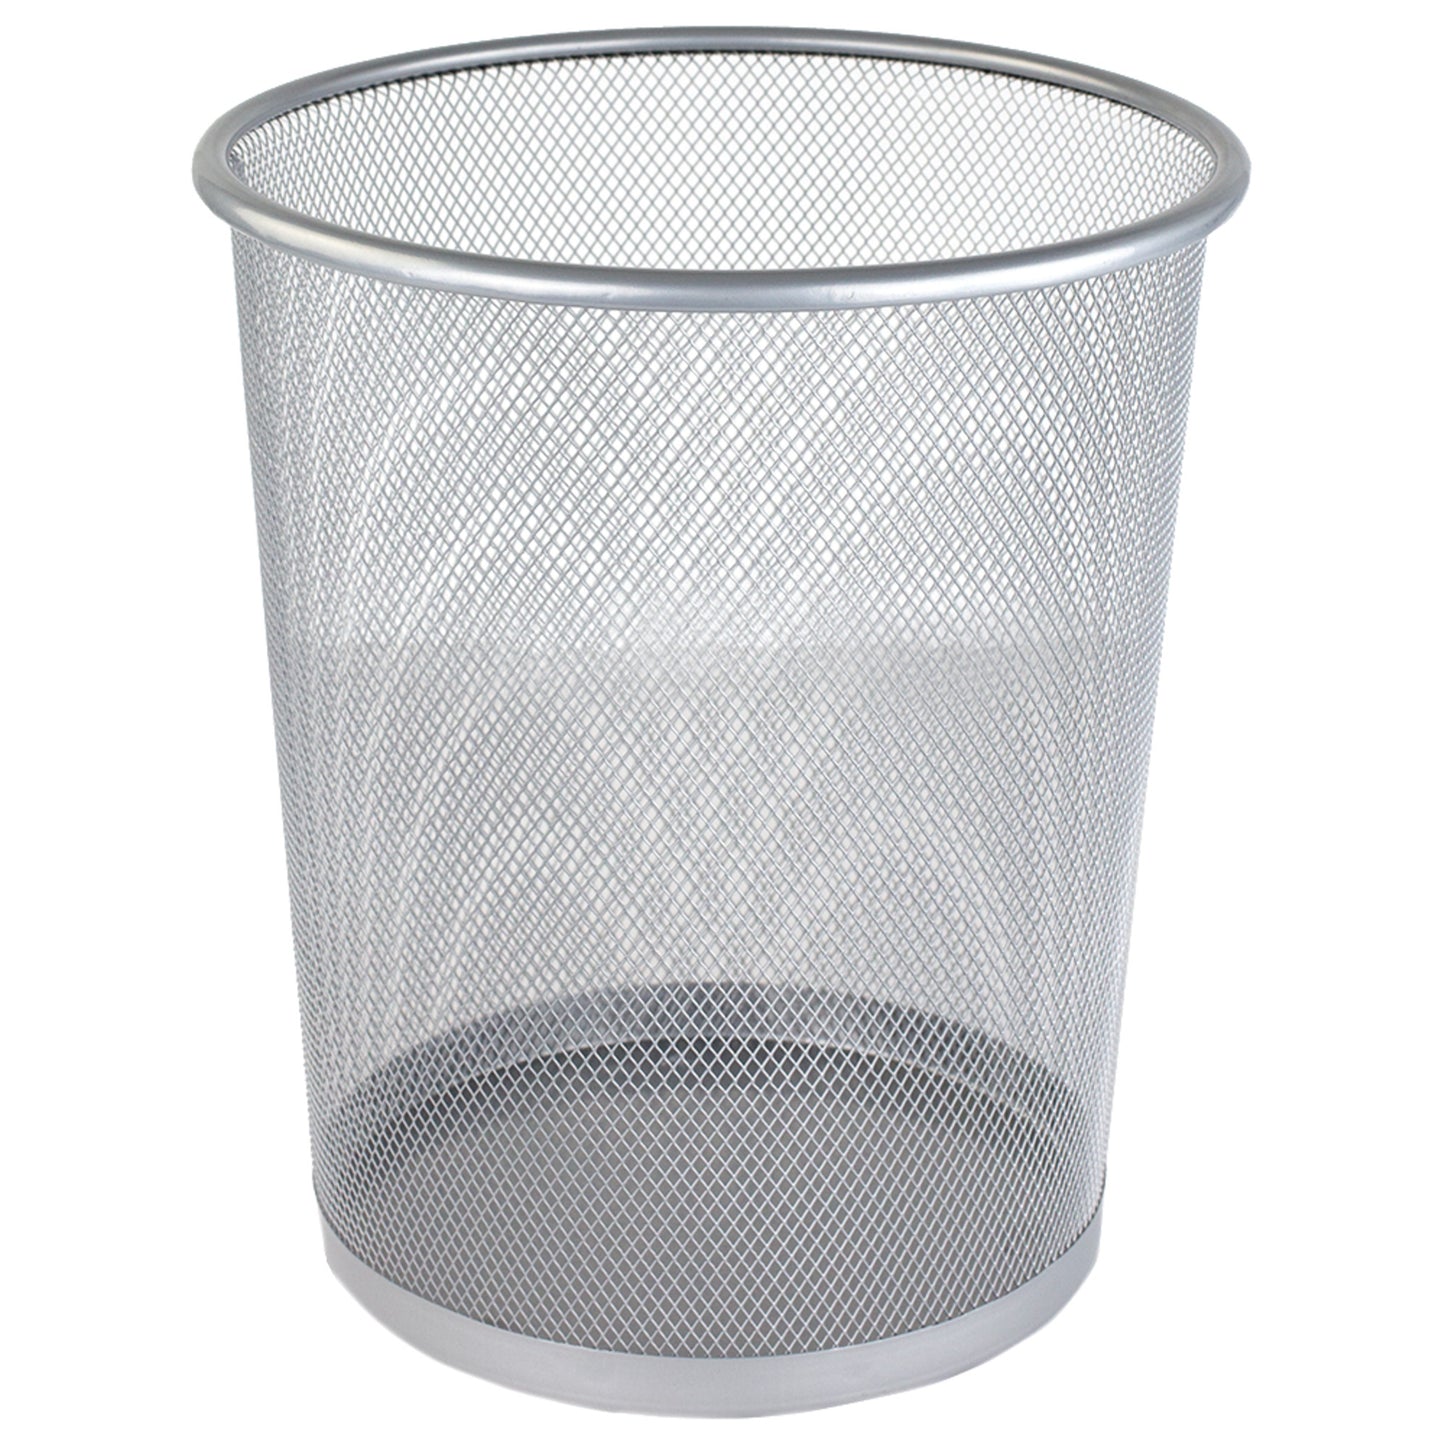 Home Basics 6 Liter Mesh Steel Waste Basket, Silver - Silver